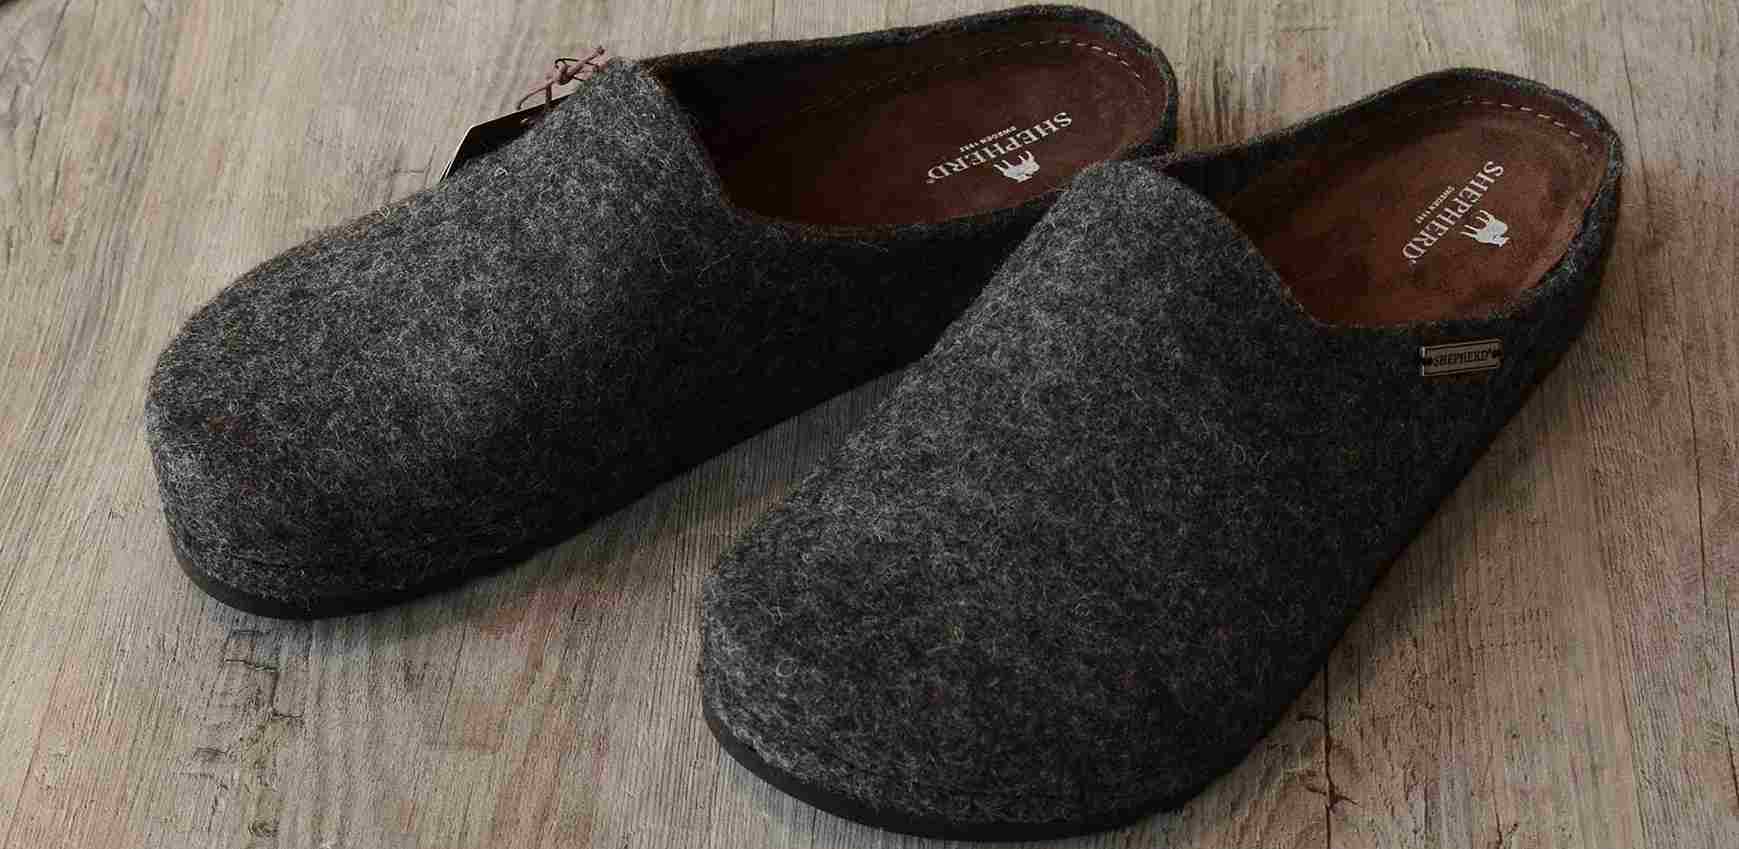 Matalan Men's Slippers